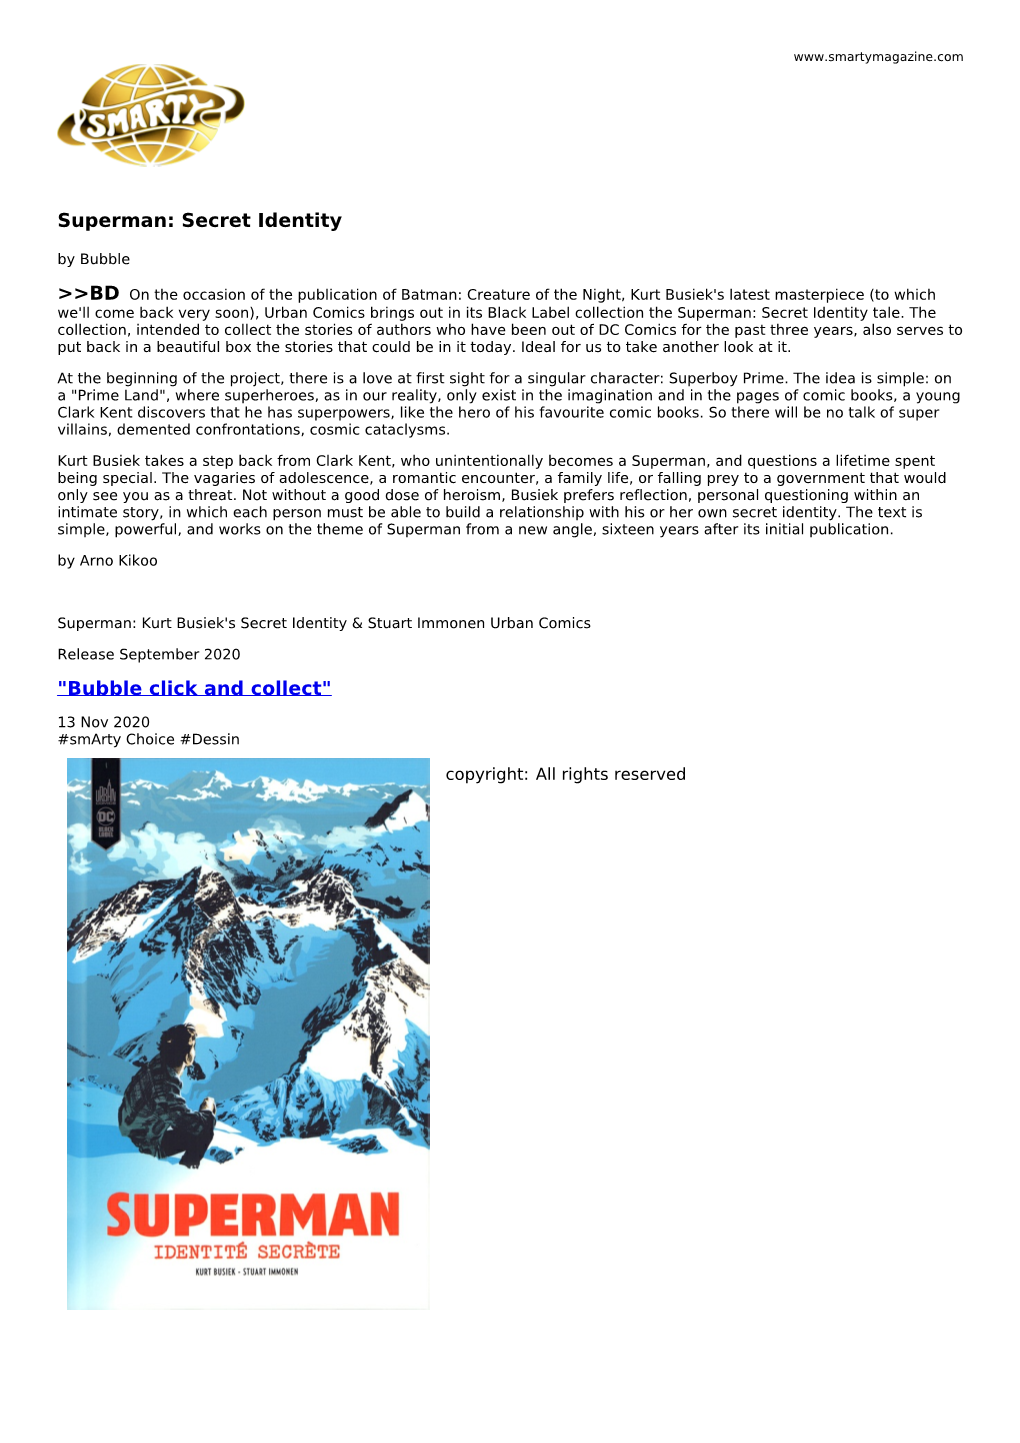 Superman: Secret Identity by Bubble